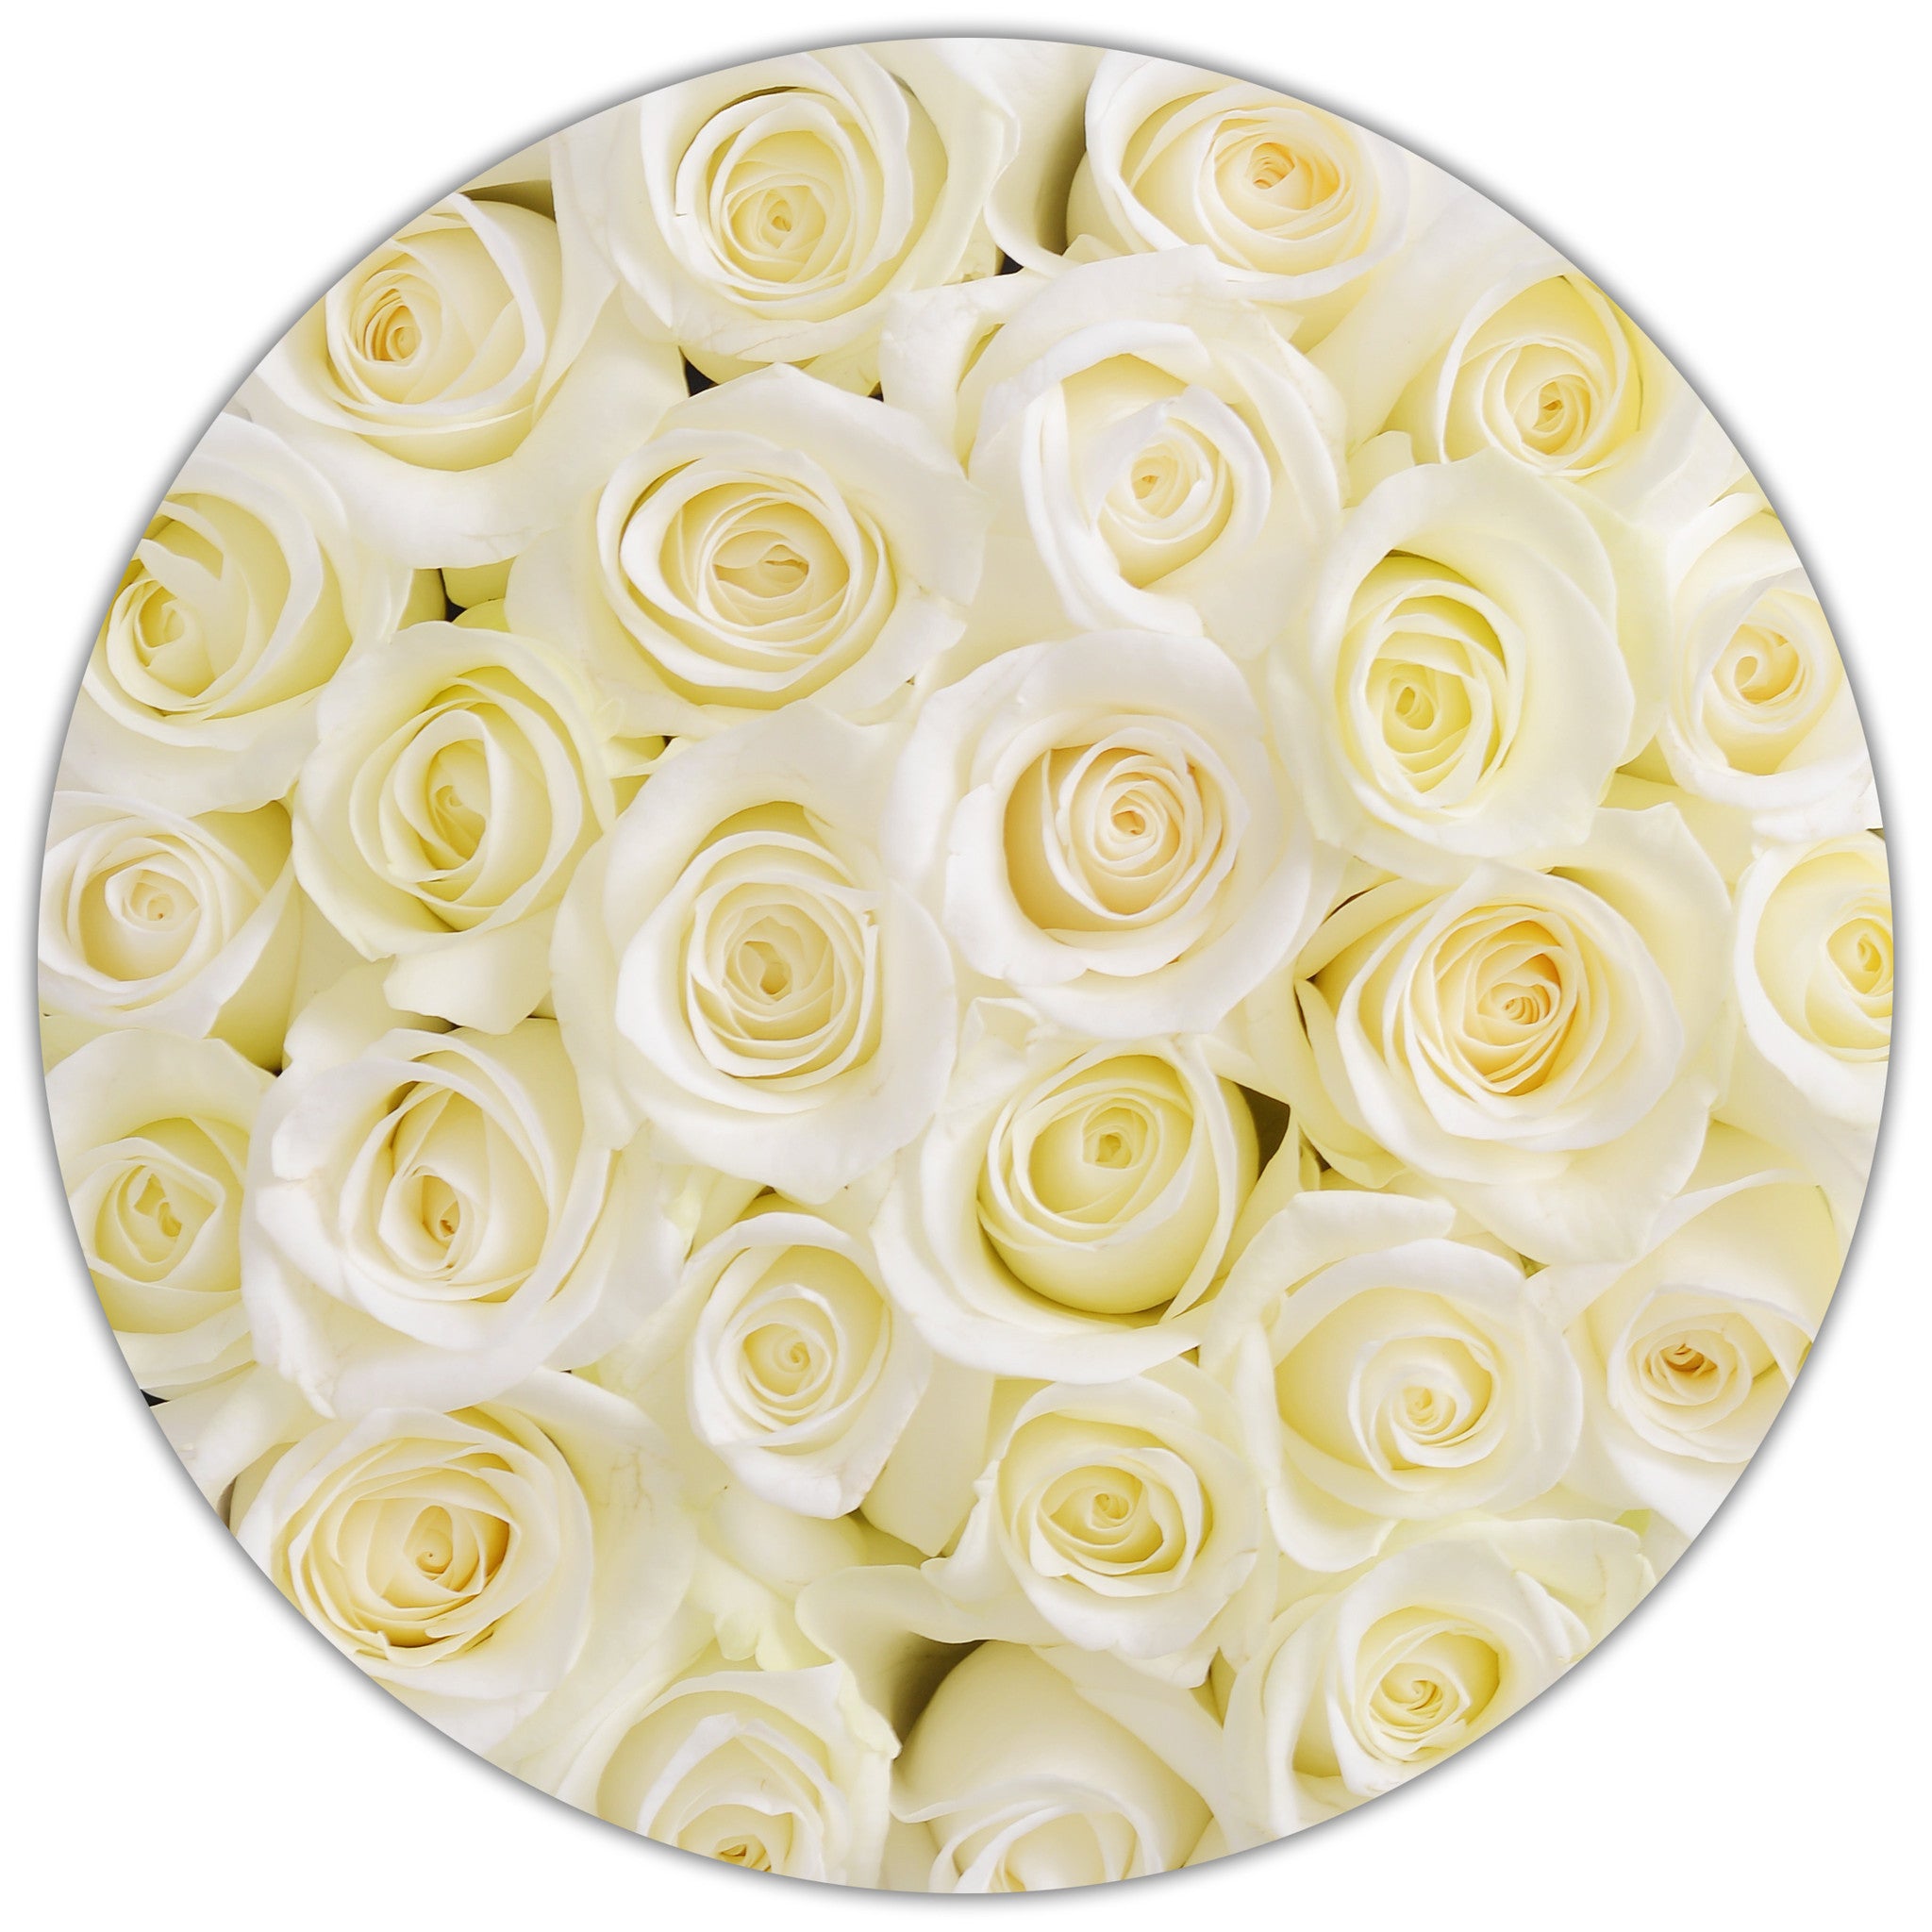 Small - White Roses - Grey Box - The Million Roses Budapest